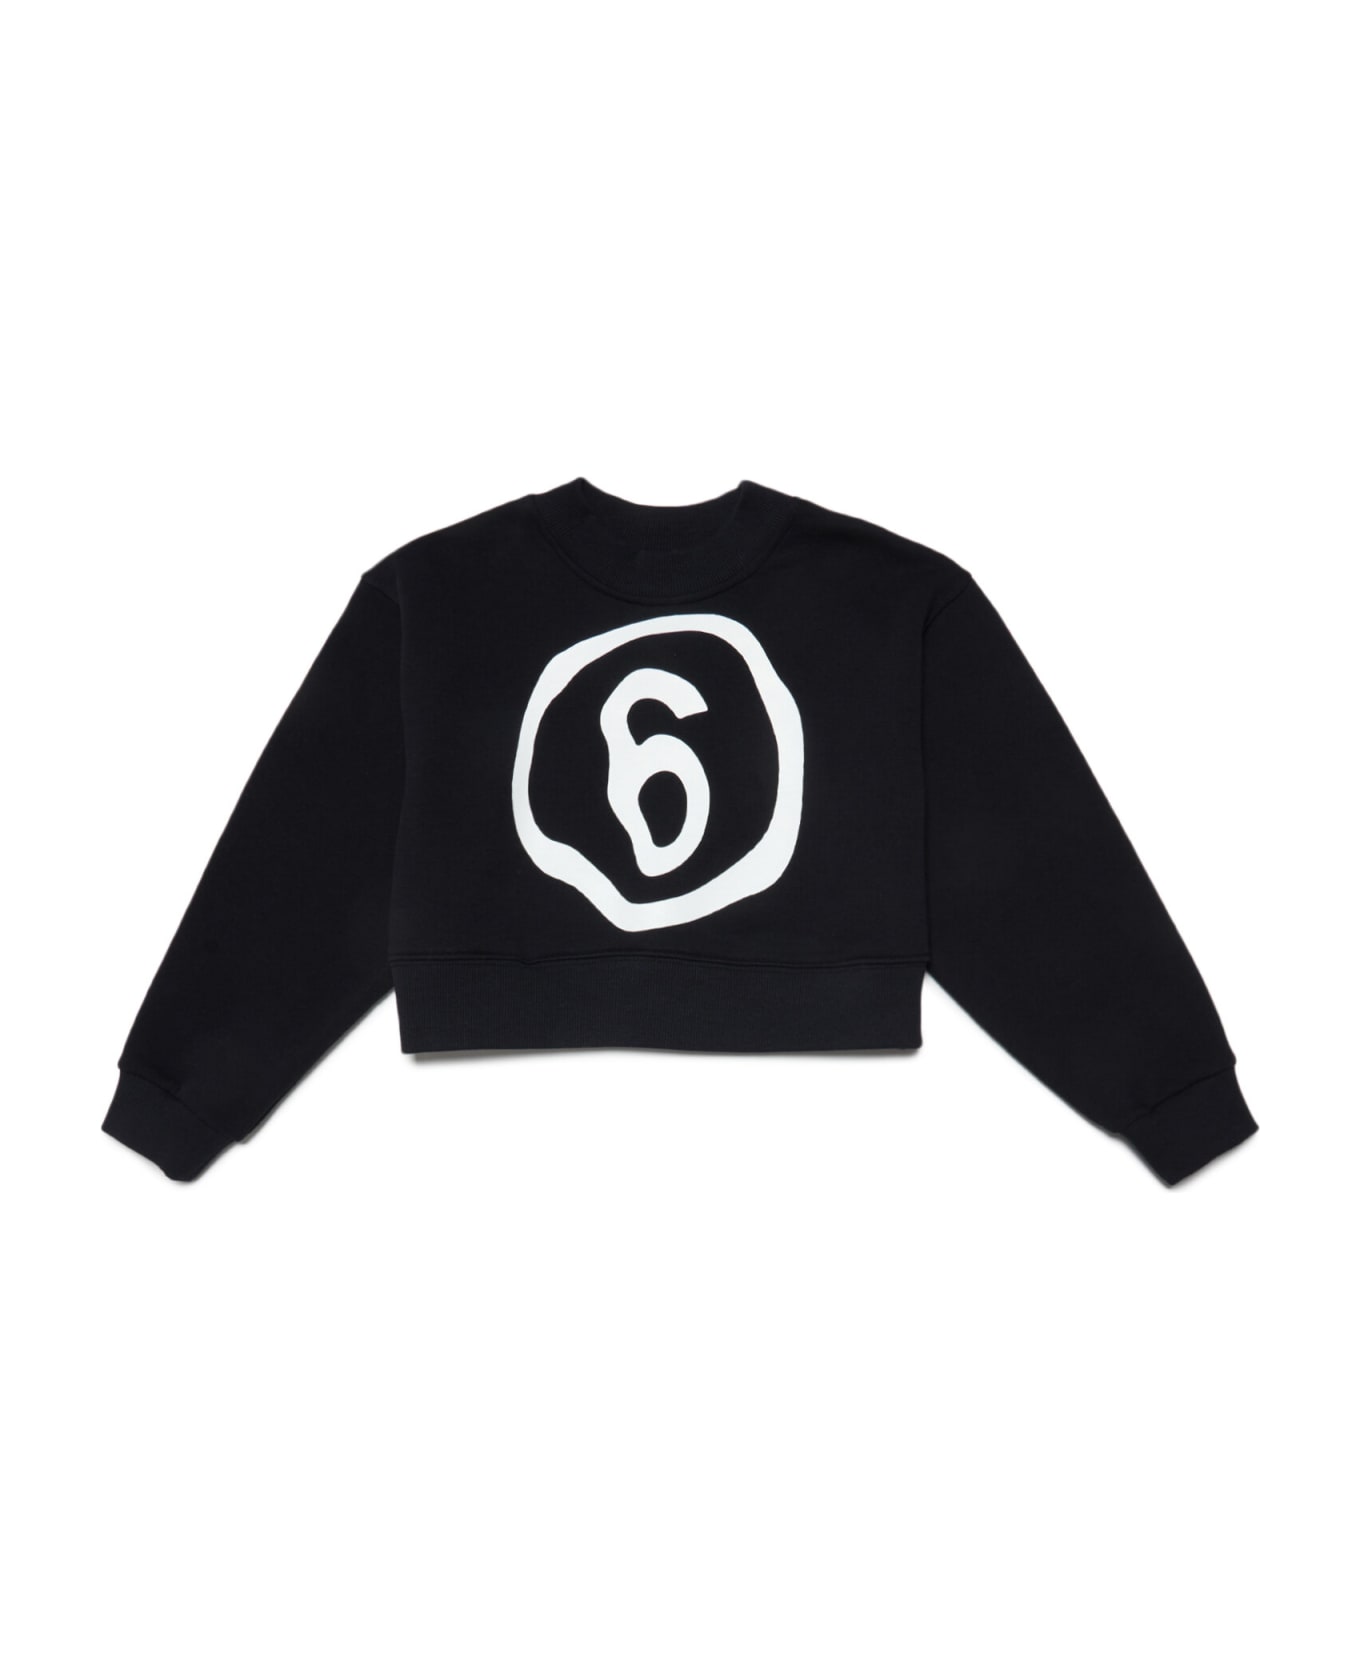 MM6 Maison Margiela Mm6s53u Sweat-shirt Maison Margiela Black Cropped Crew-neck Cotton Sweatshirt With Fluid Effect Logo - Nero